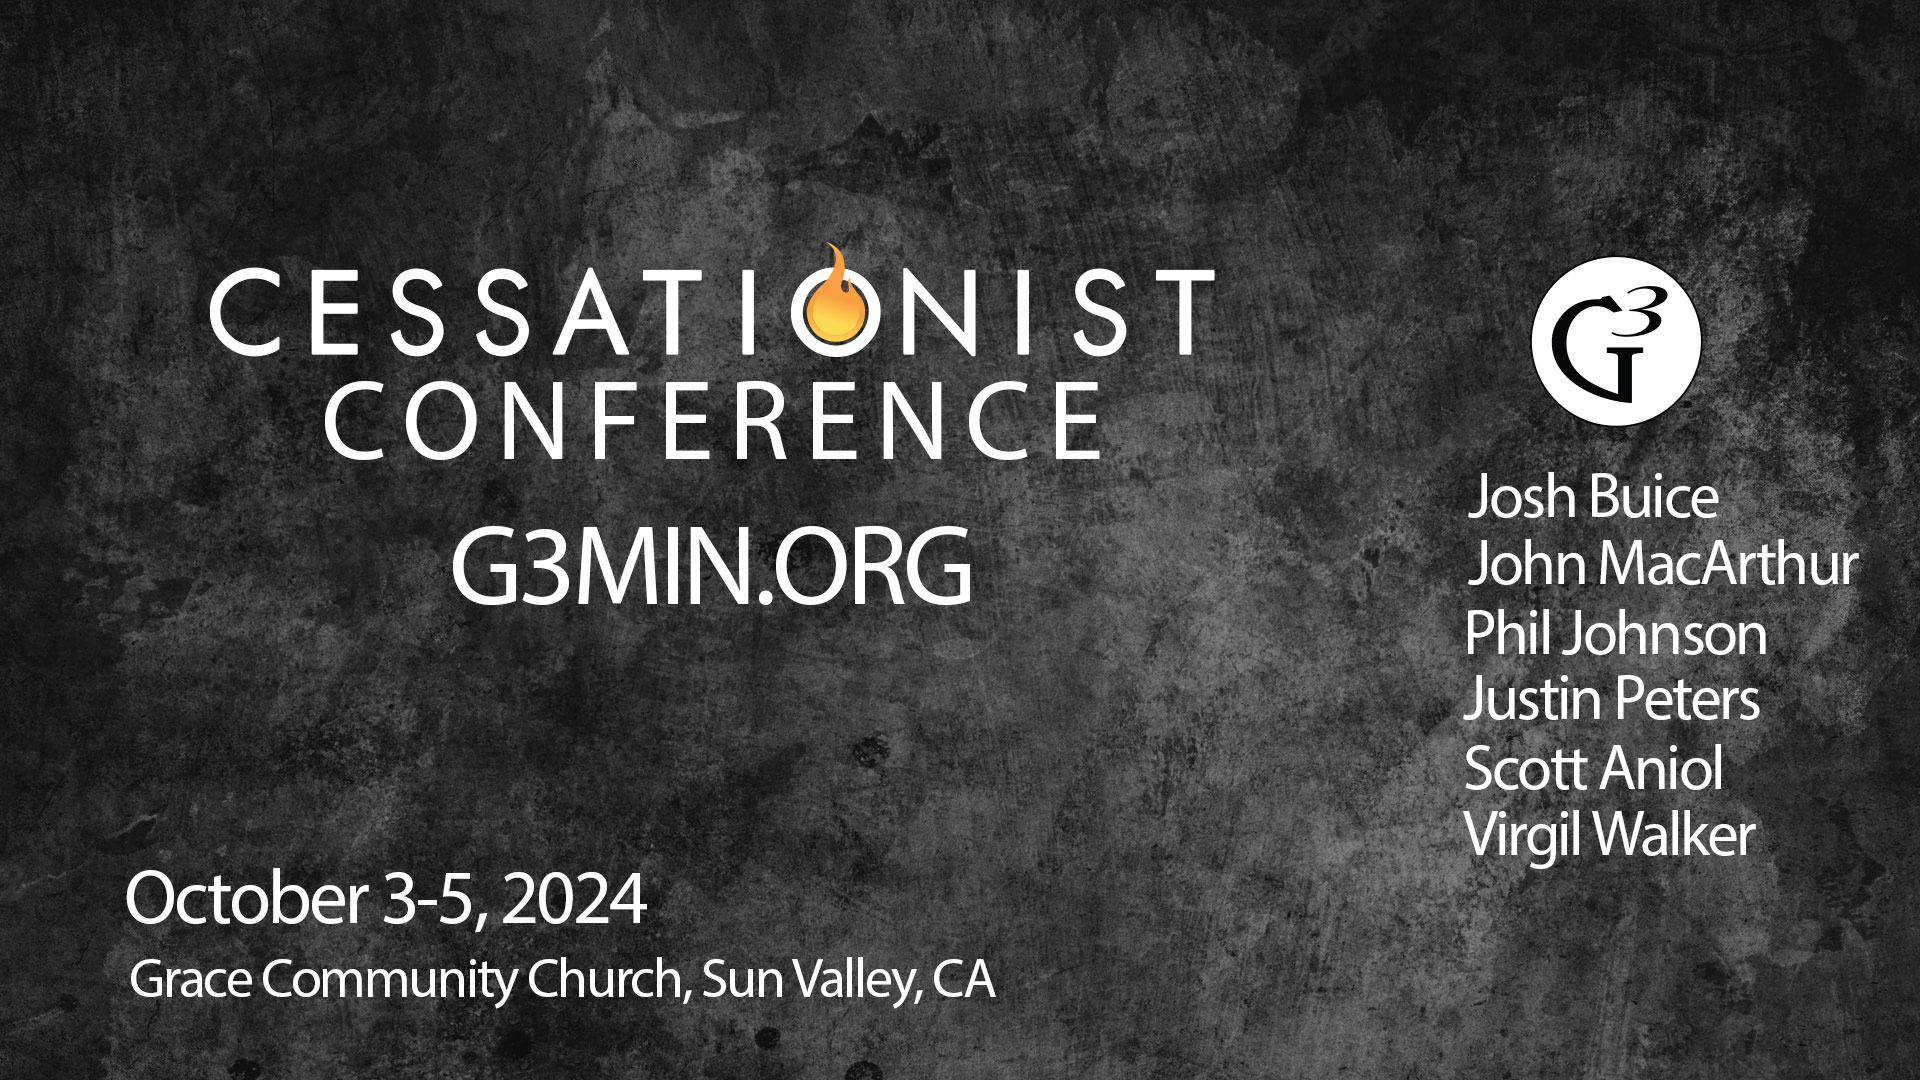 Cessationist Conference G3 Ministries